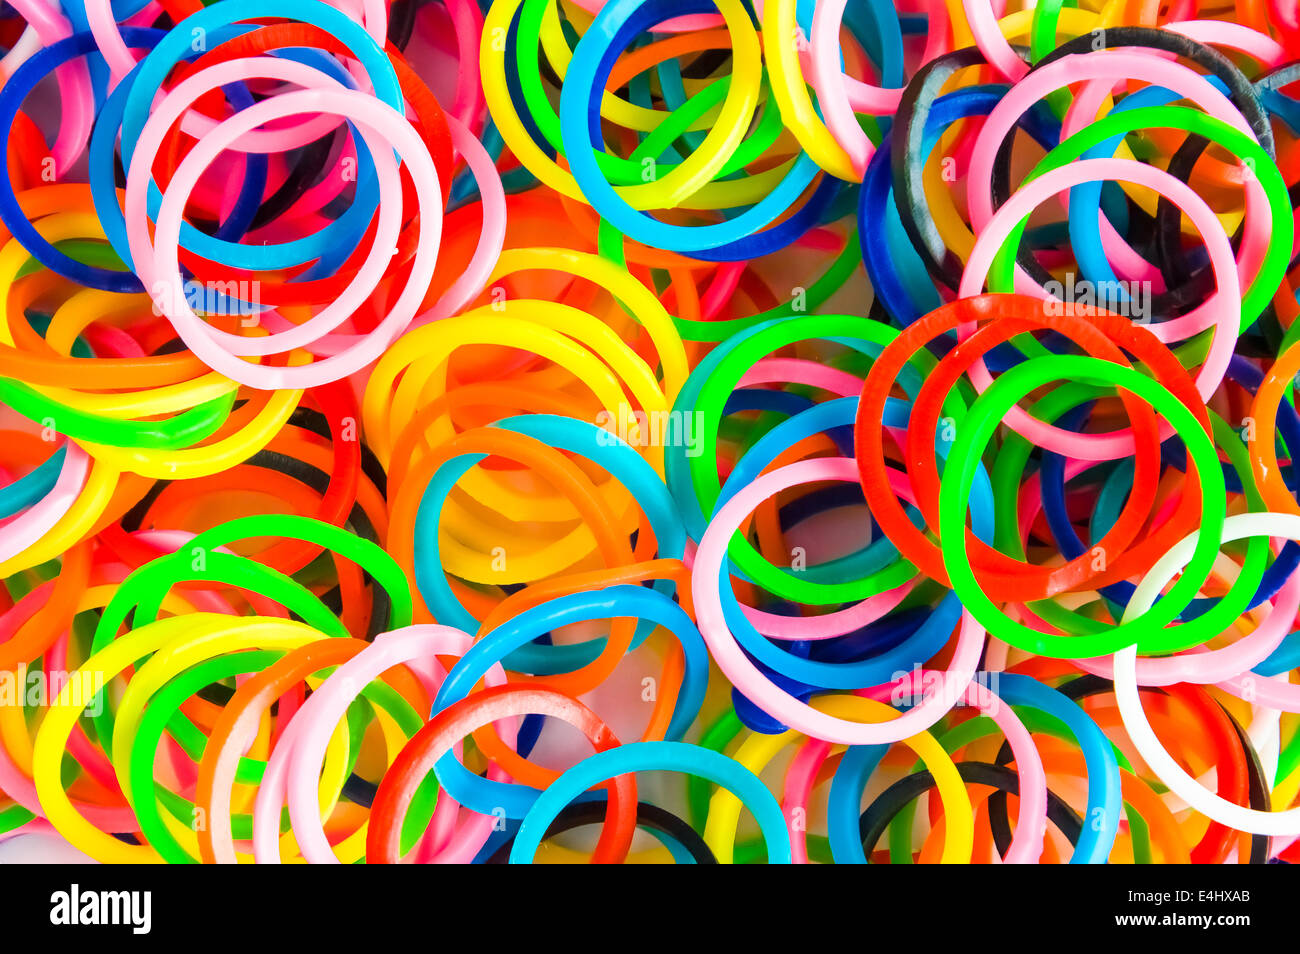 Colorful rubber bands Stock Photo by ©mahlebashieva.yahoo.com